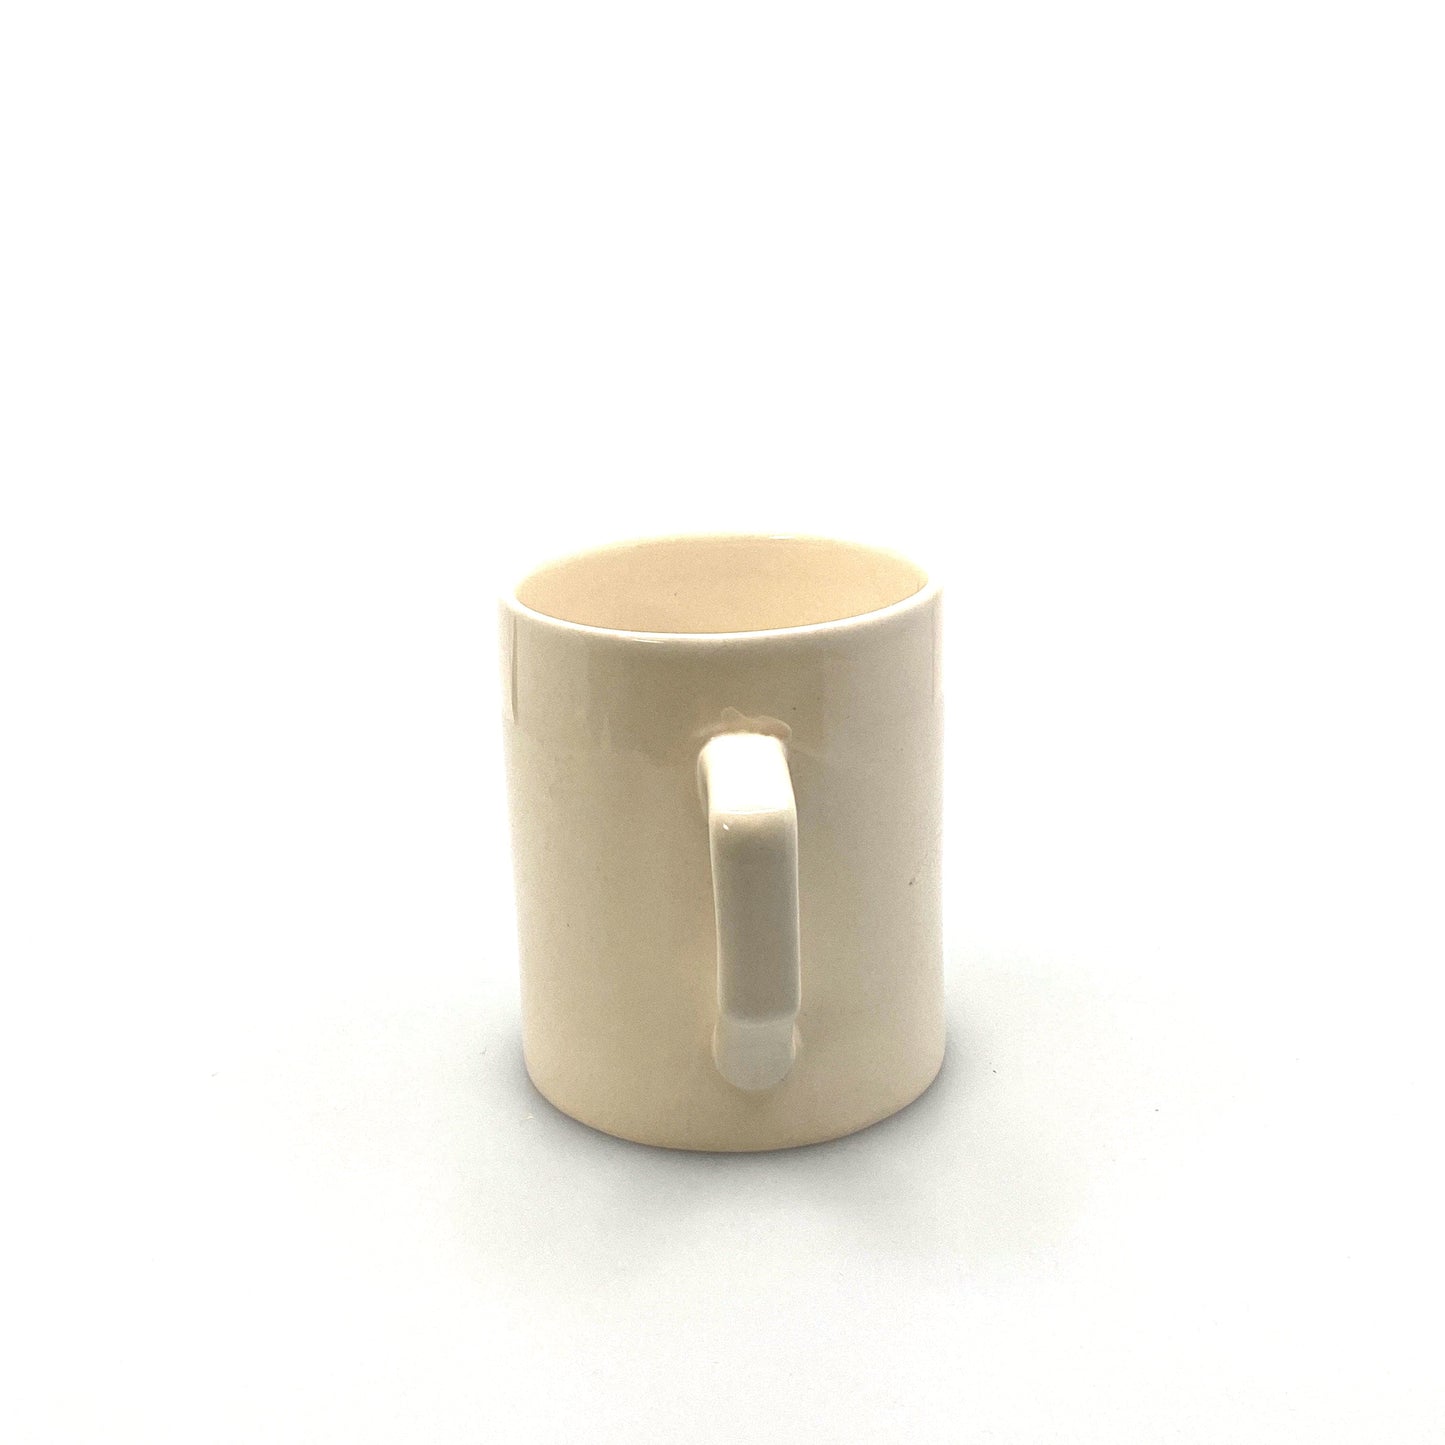 Novelty “Bug at the Bottom” Trick Humor White Ceramic Coffee Mug